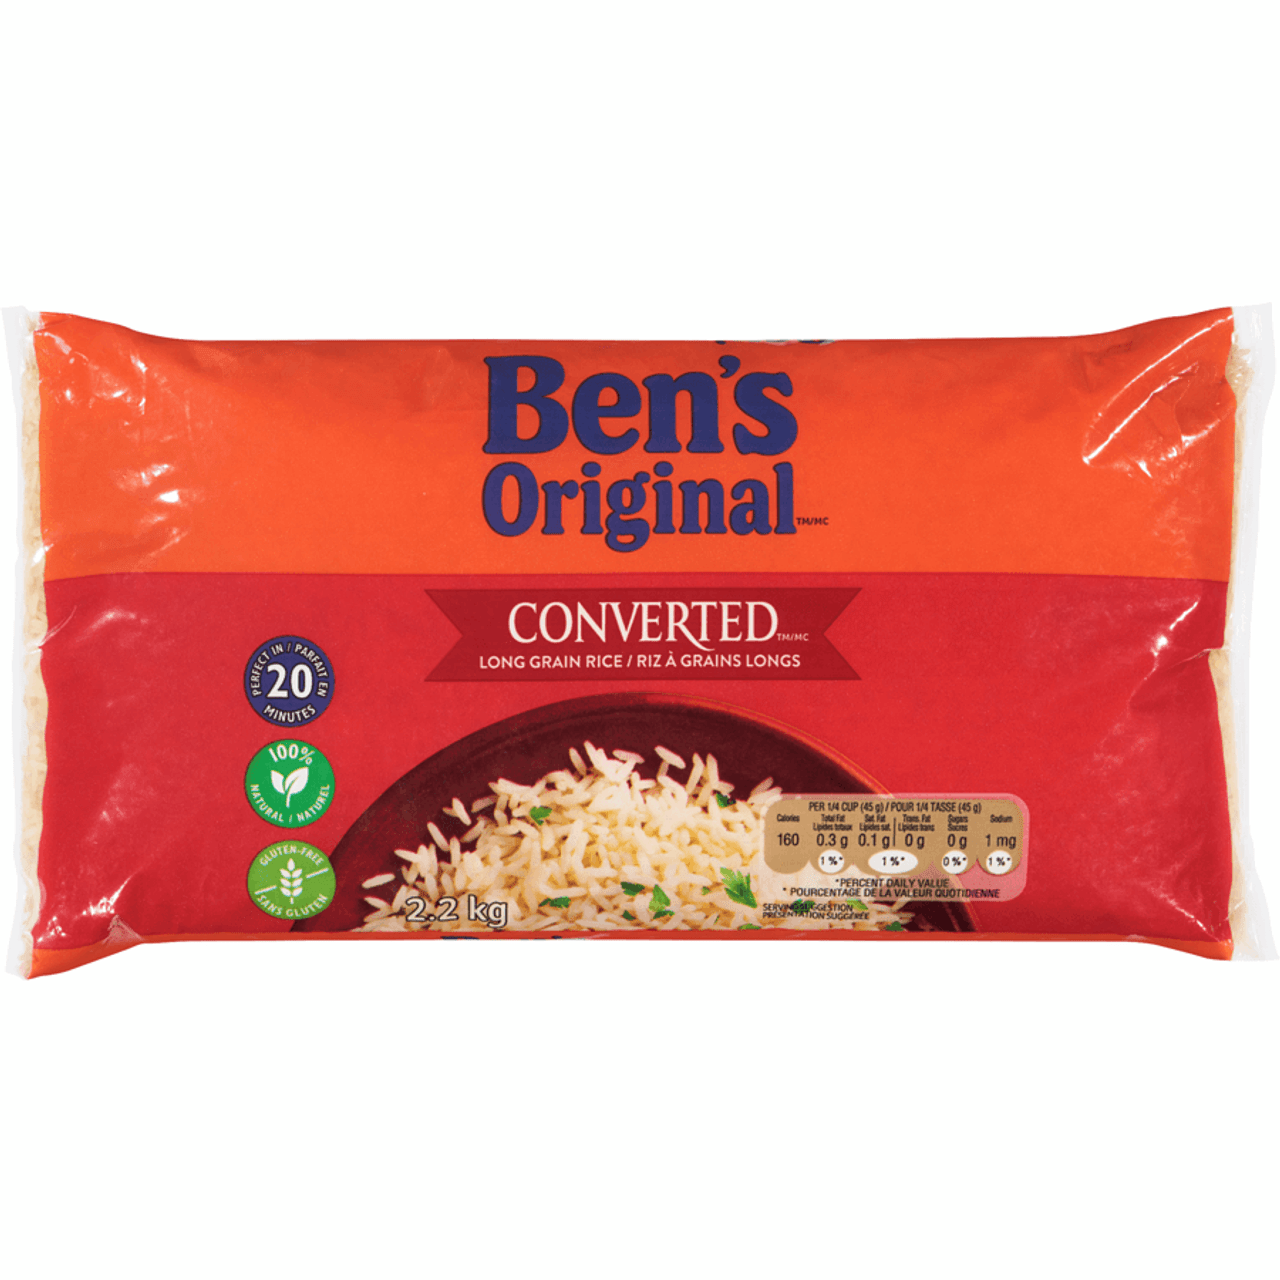 EN'S ORIGINAL Converted Long Grain Rice - Classic and Convenient | 2x2.2 kg Pack- CHICKEN PIECES